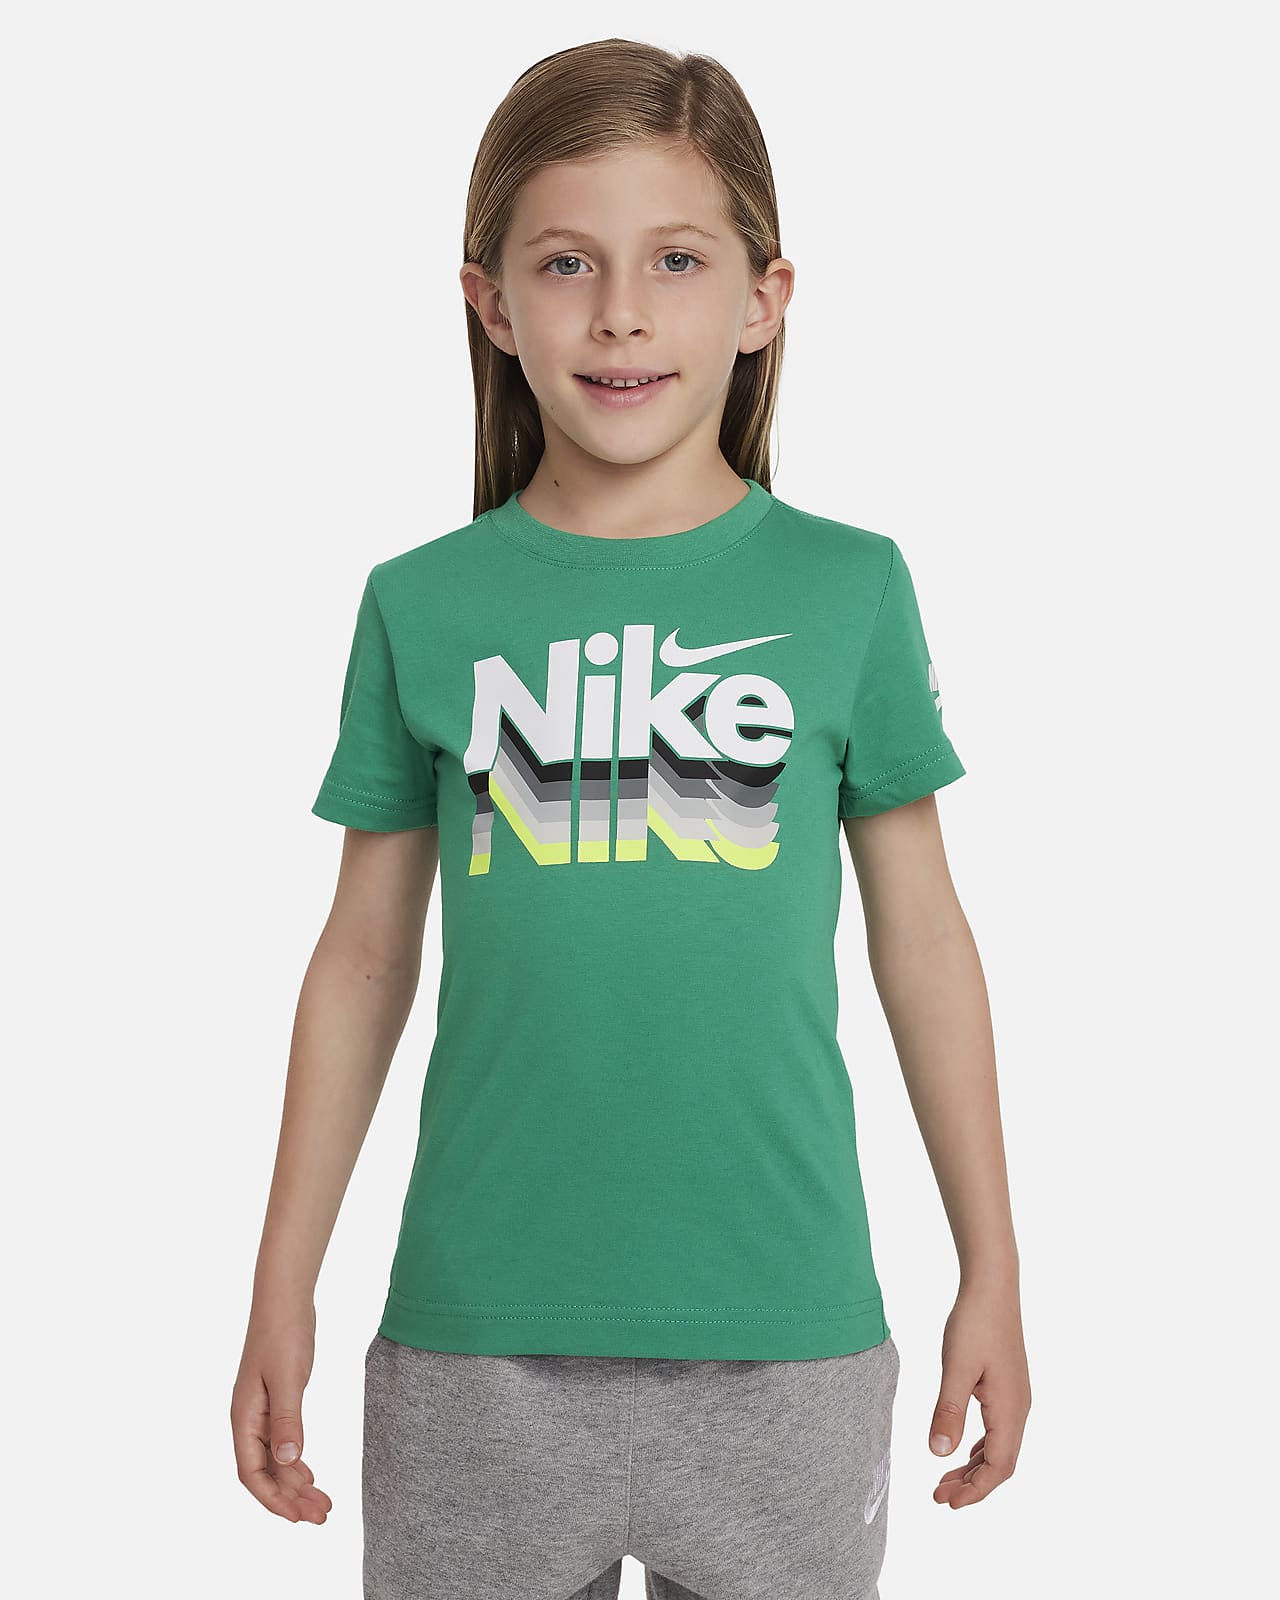 Nike Retro Fader Little Kids' Graphic T-Shirt